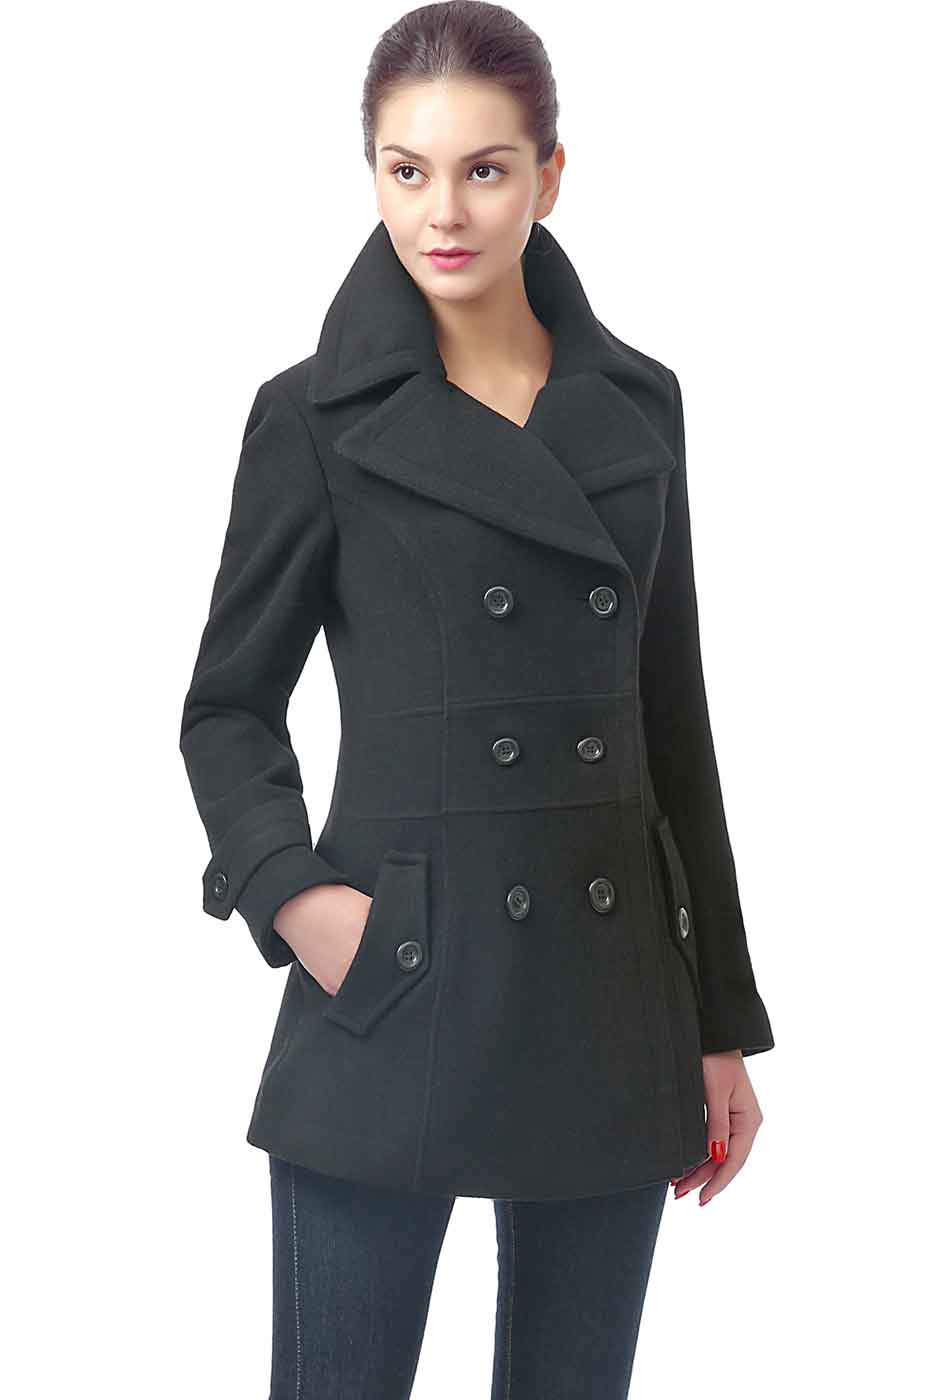 BGSD Womens Kim Wool Walking Coat Regular /& Plus Size /& Petite